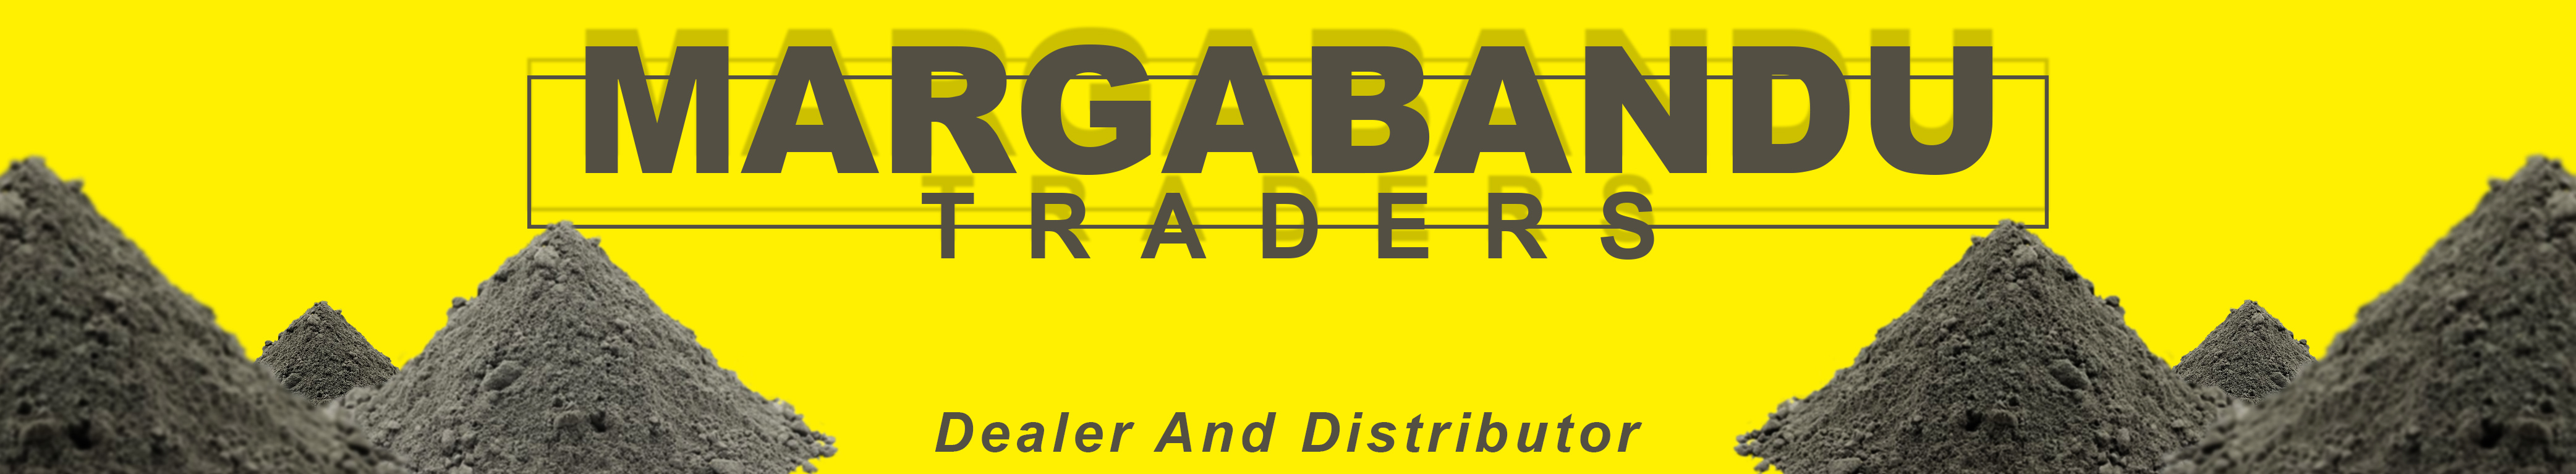 Margabandu Traders Banner Image